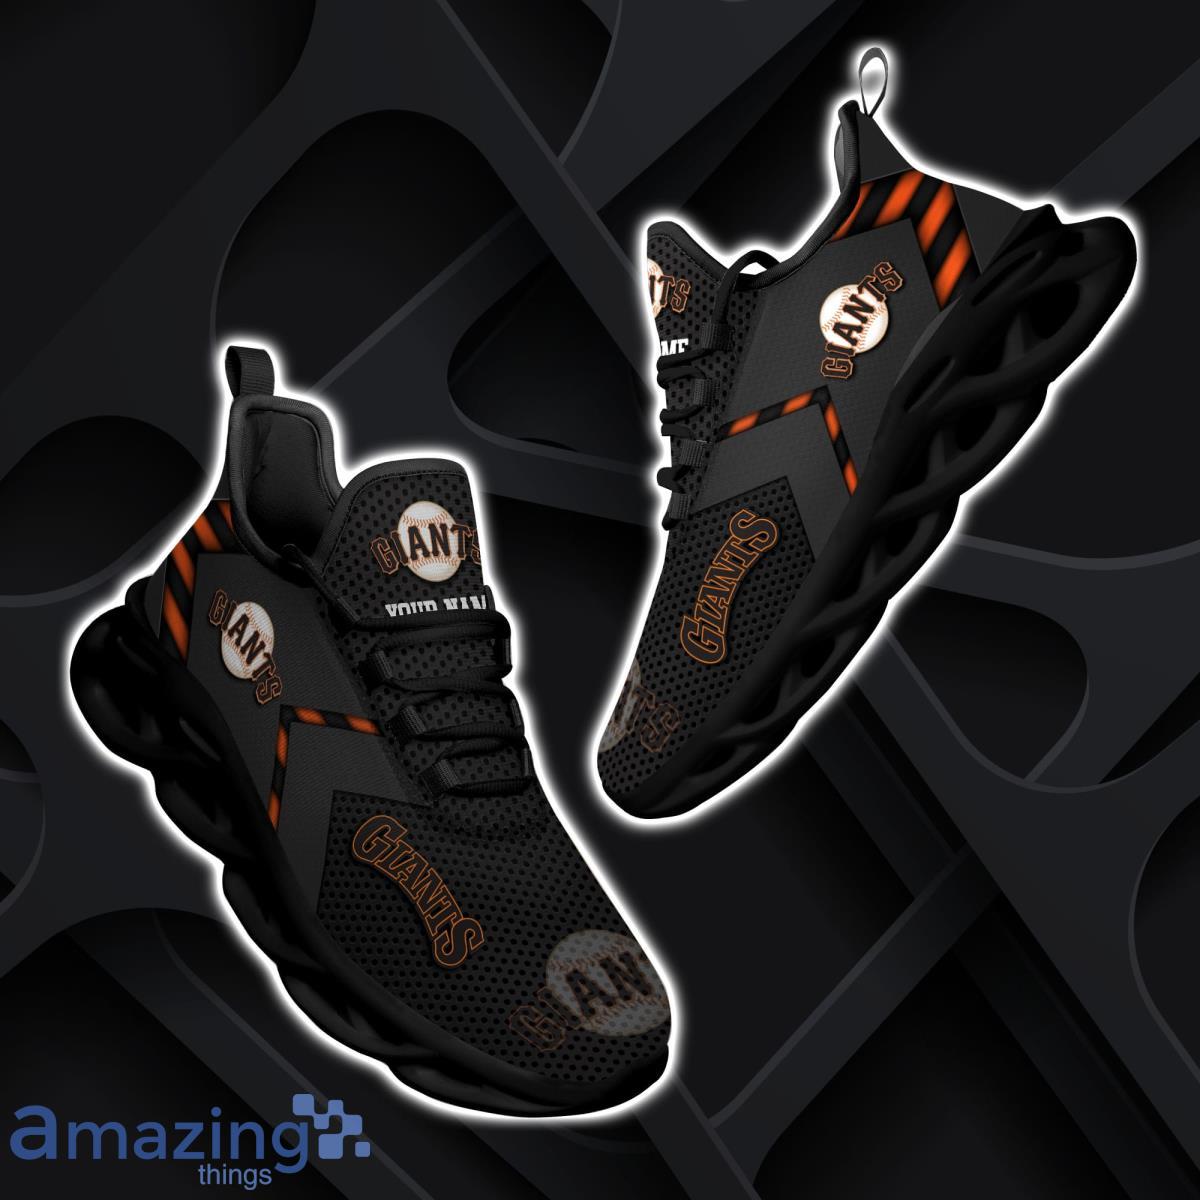 San Francisco Giants Custom Name Max Soul Sneaker Running Shoes For  Football Fan